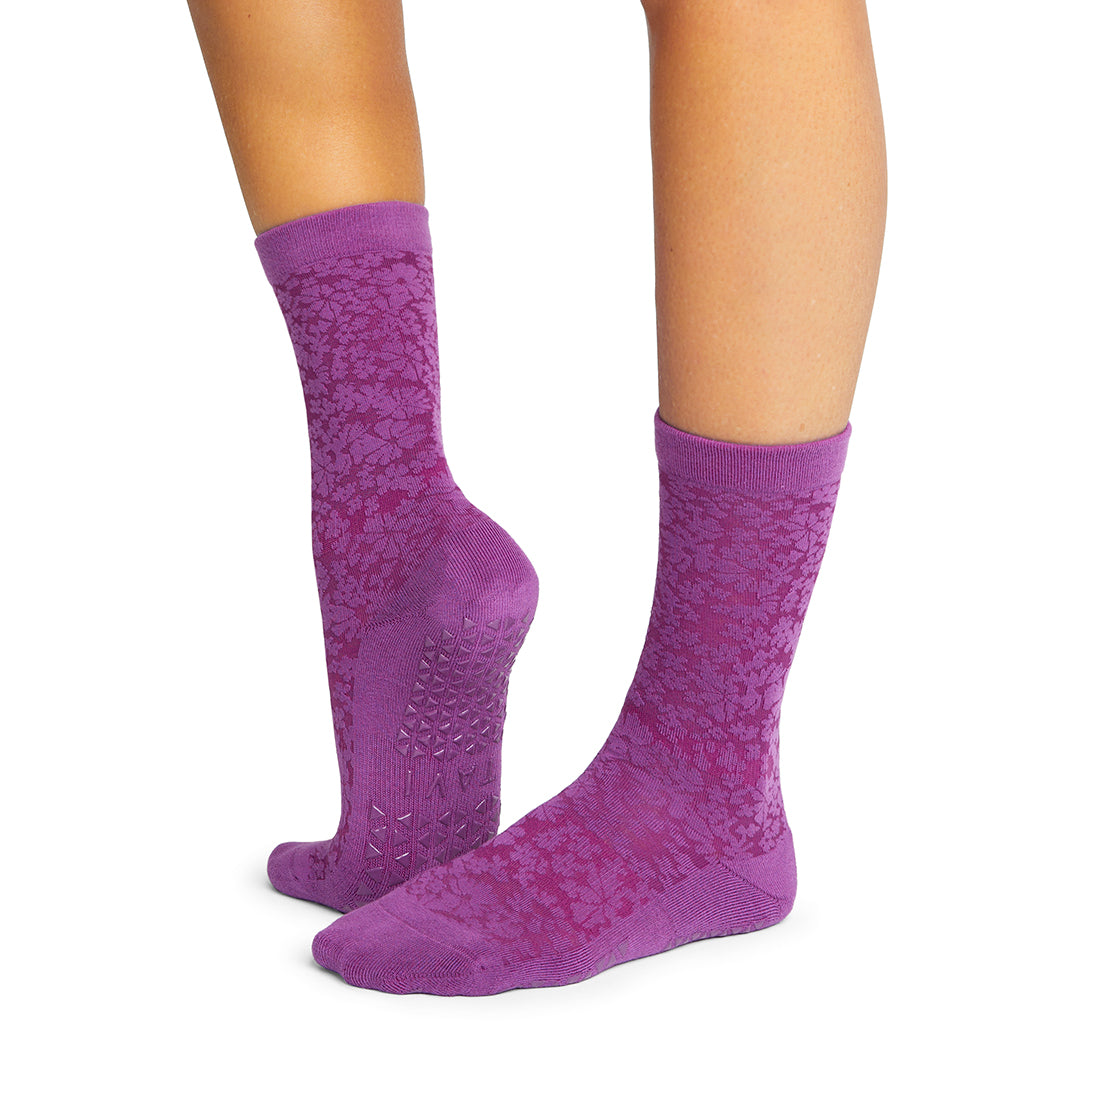 Tavi Noir Kai Grip socks, Ebony, Small - Sissel UK